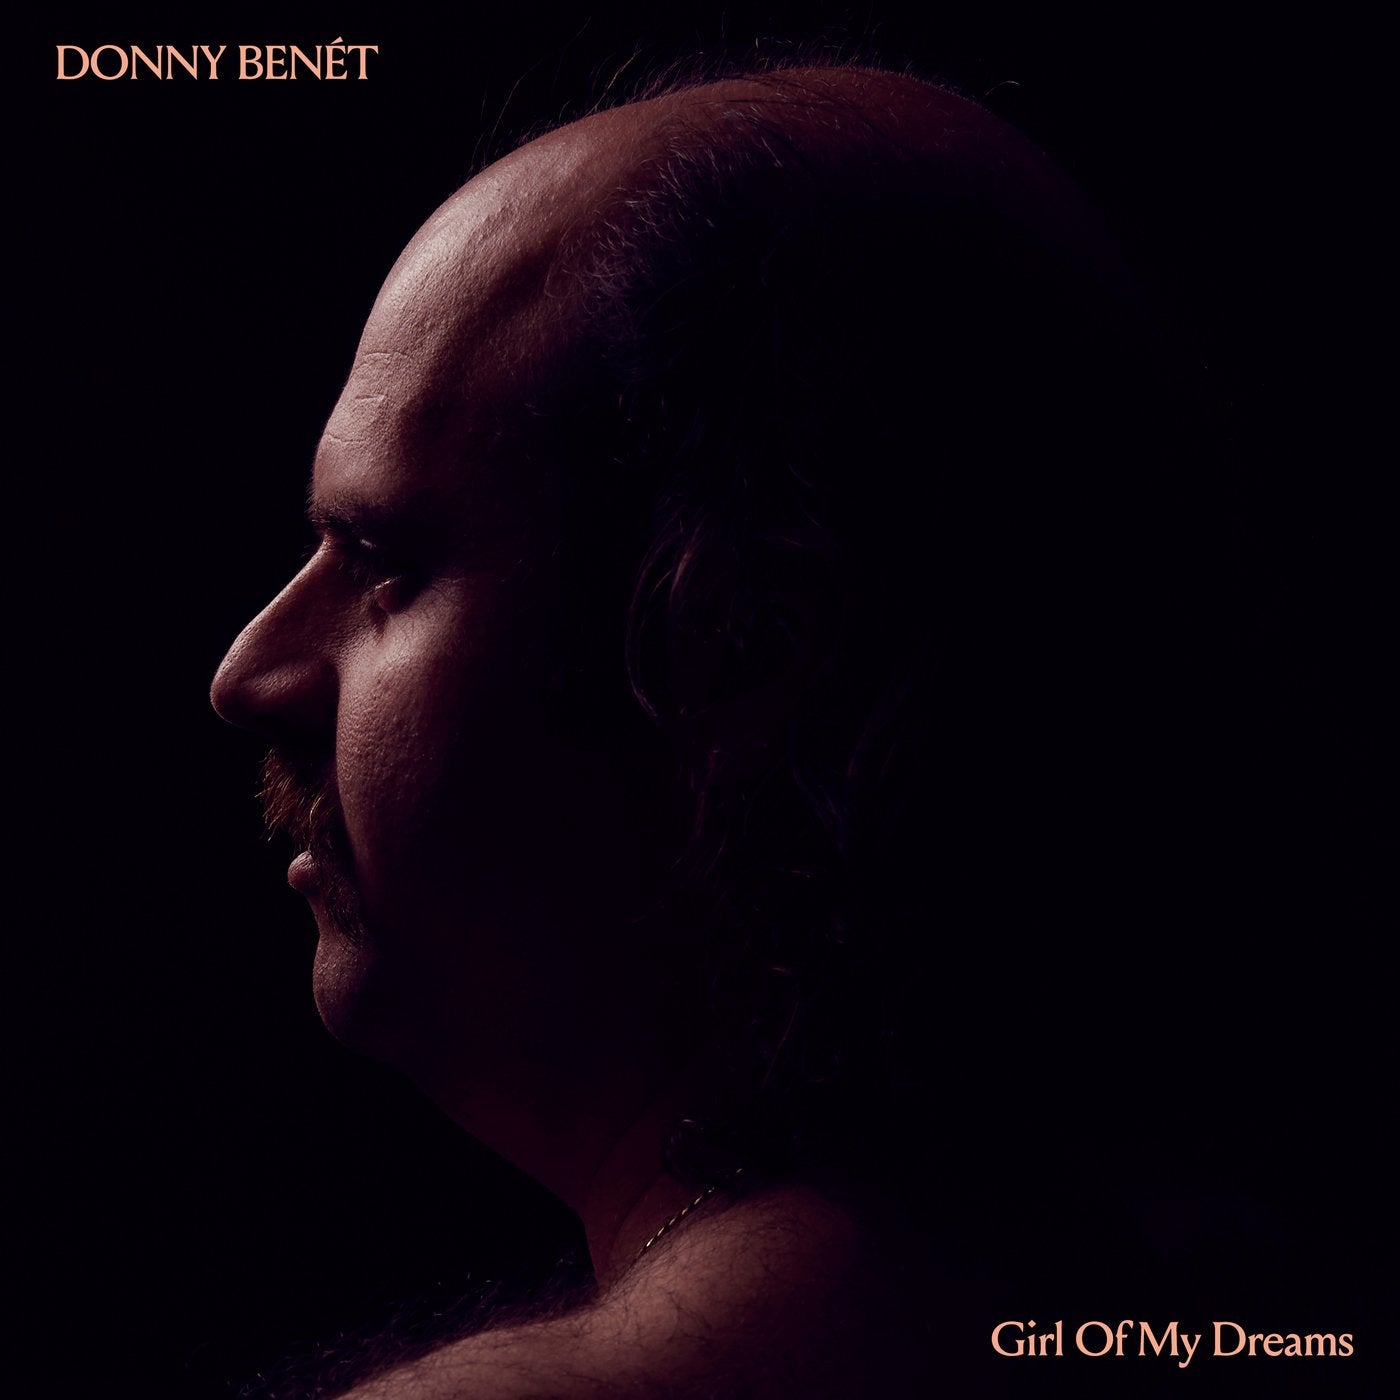 Donny Benet Music & Downloads on Beatport